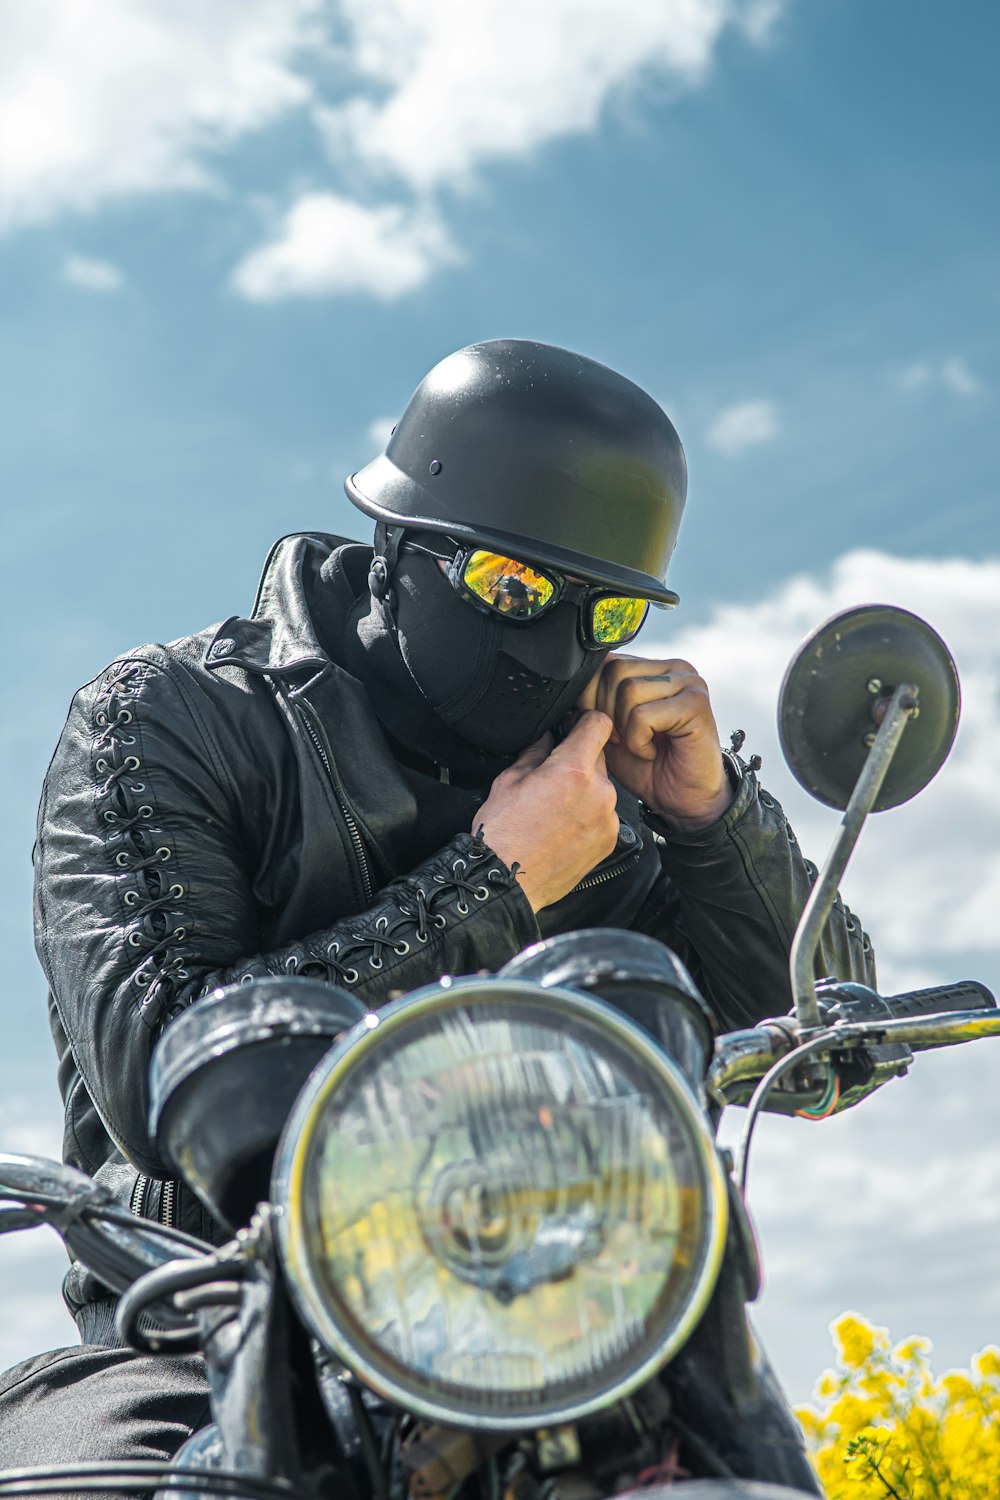 man in black leather jacket wearing black helmet riding on motorcycle during daytime